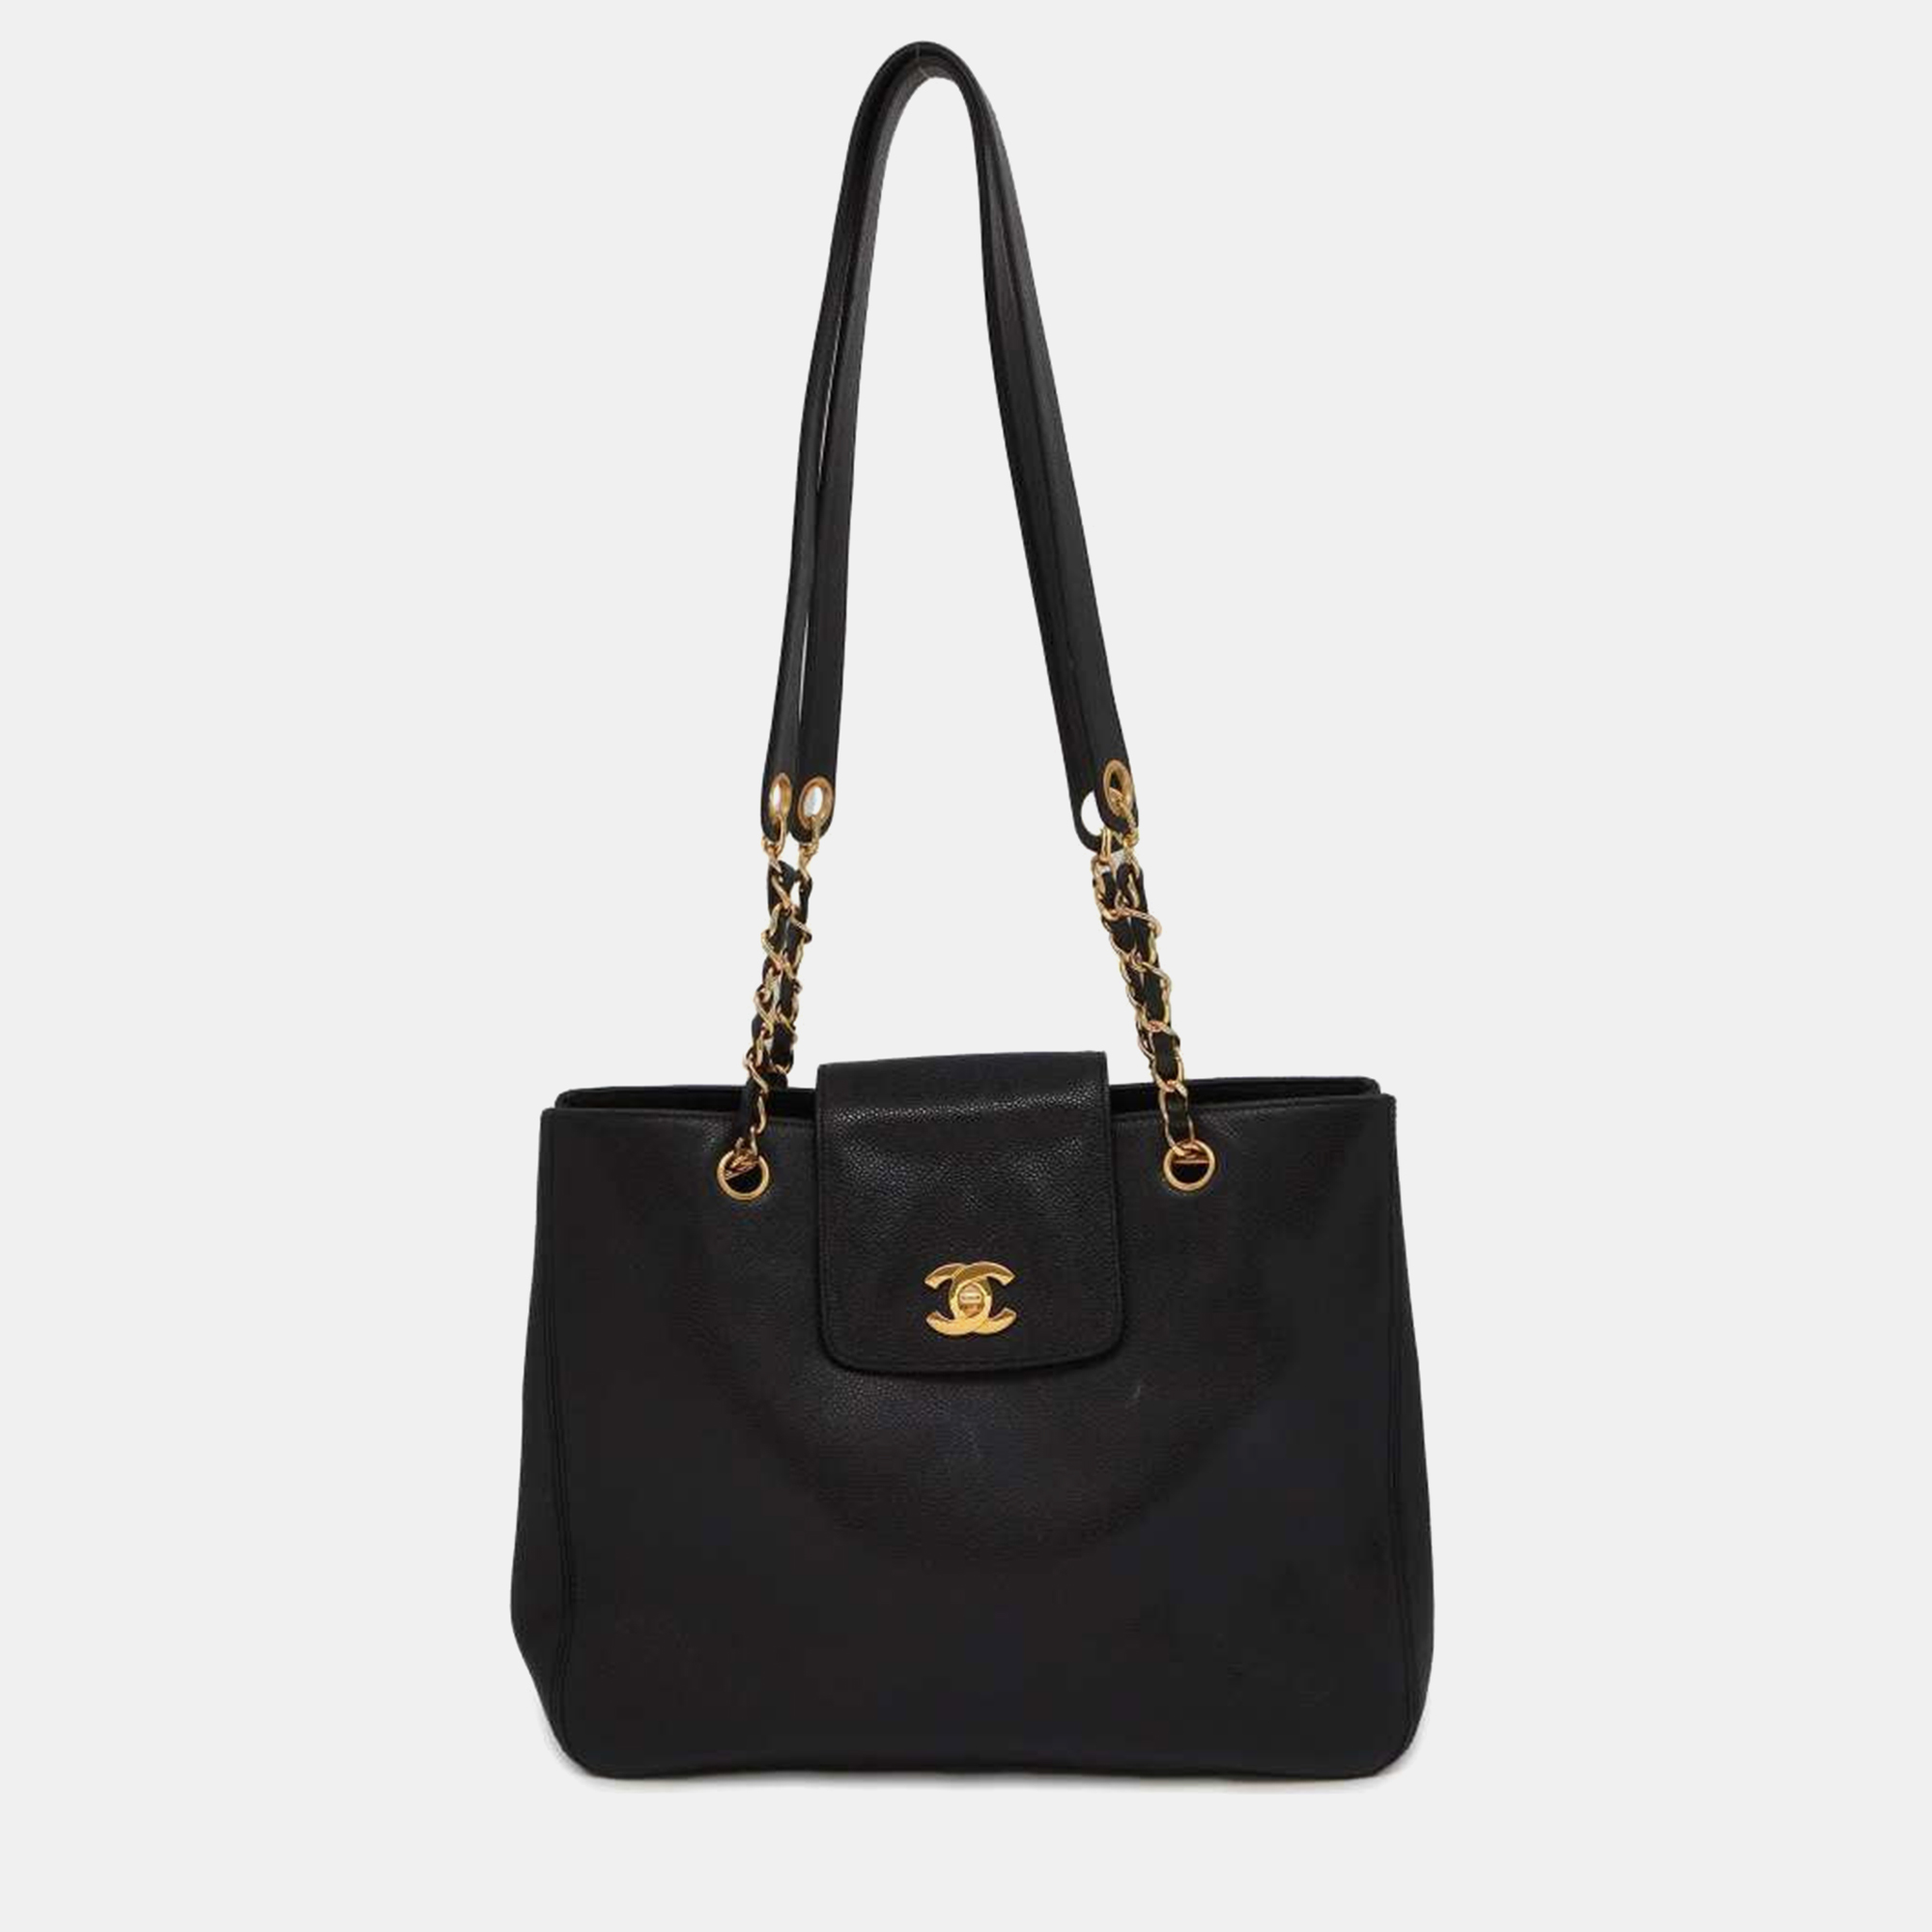 Chanel black caviar leather supermodel bag